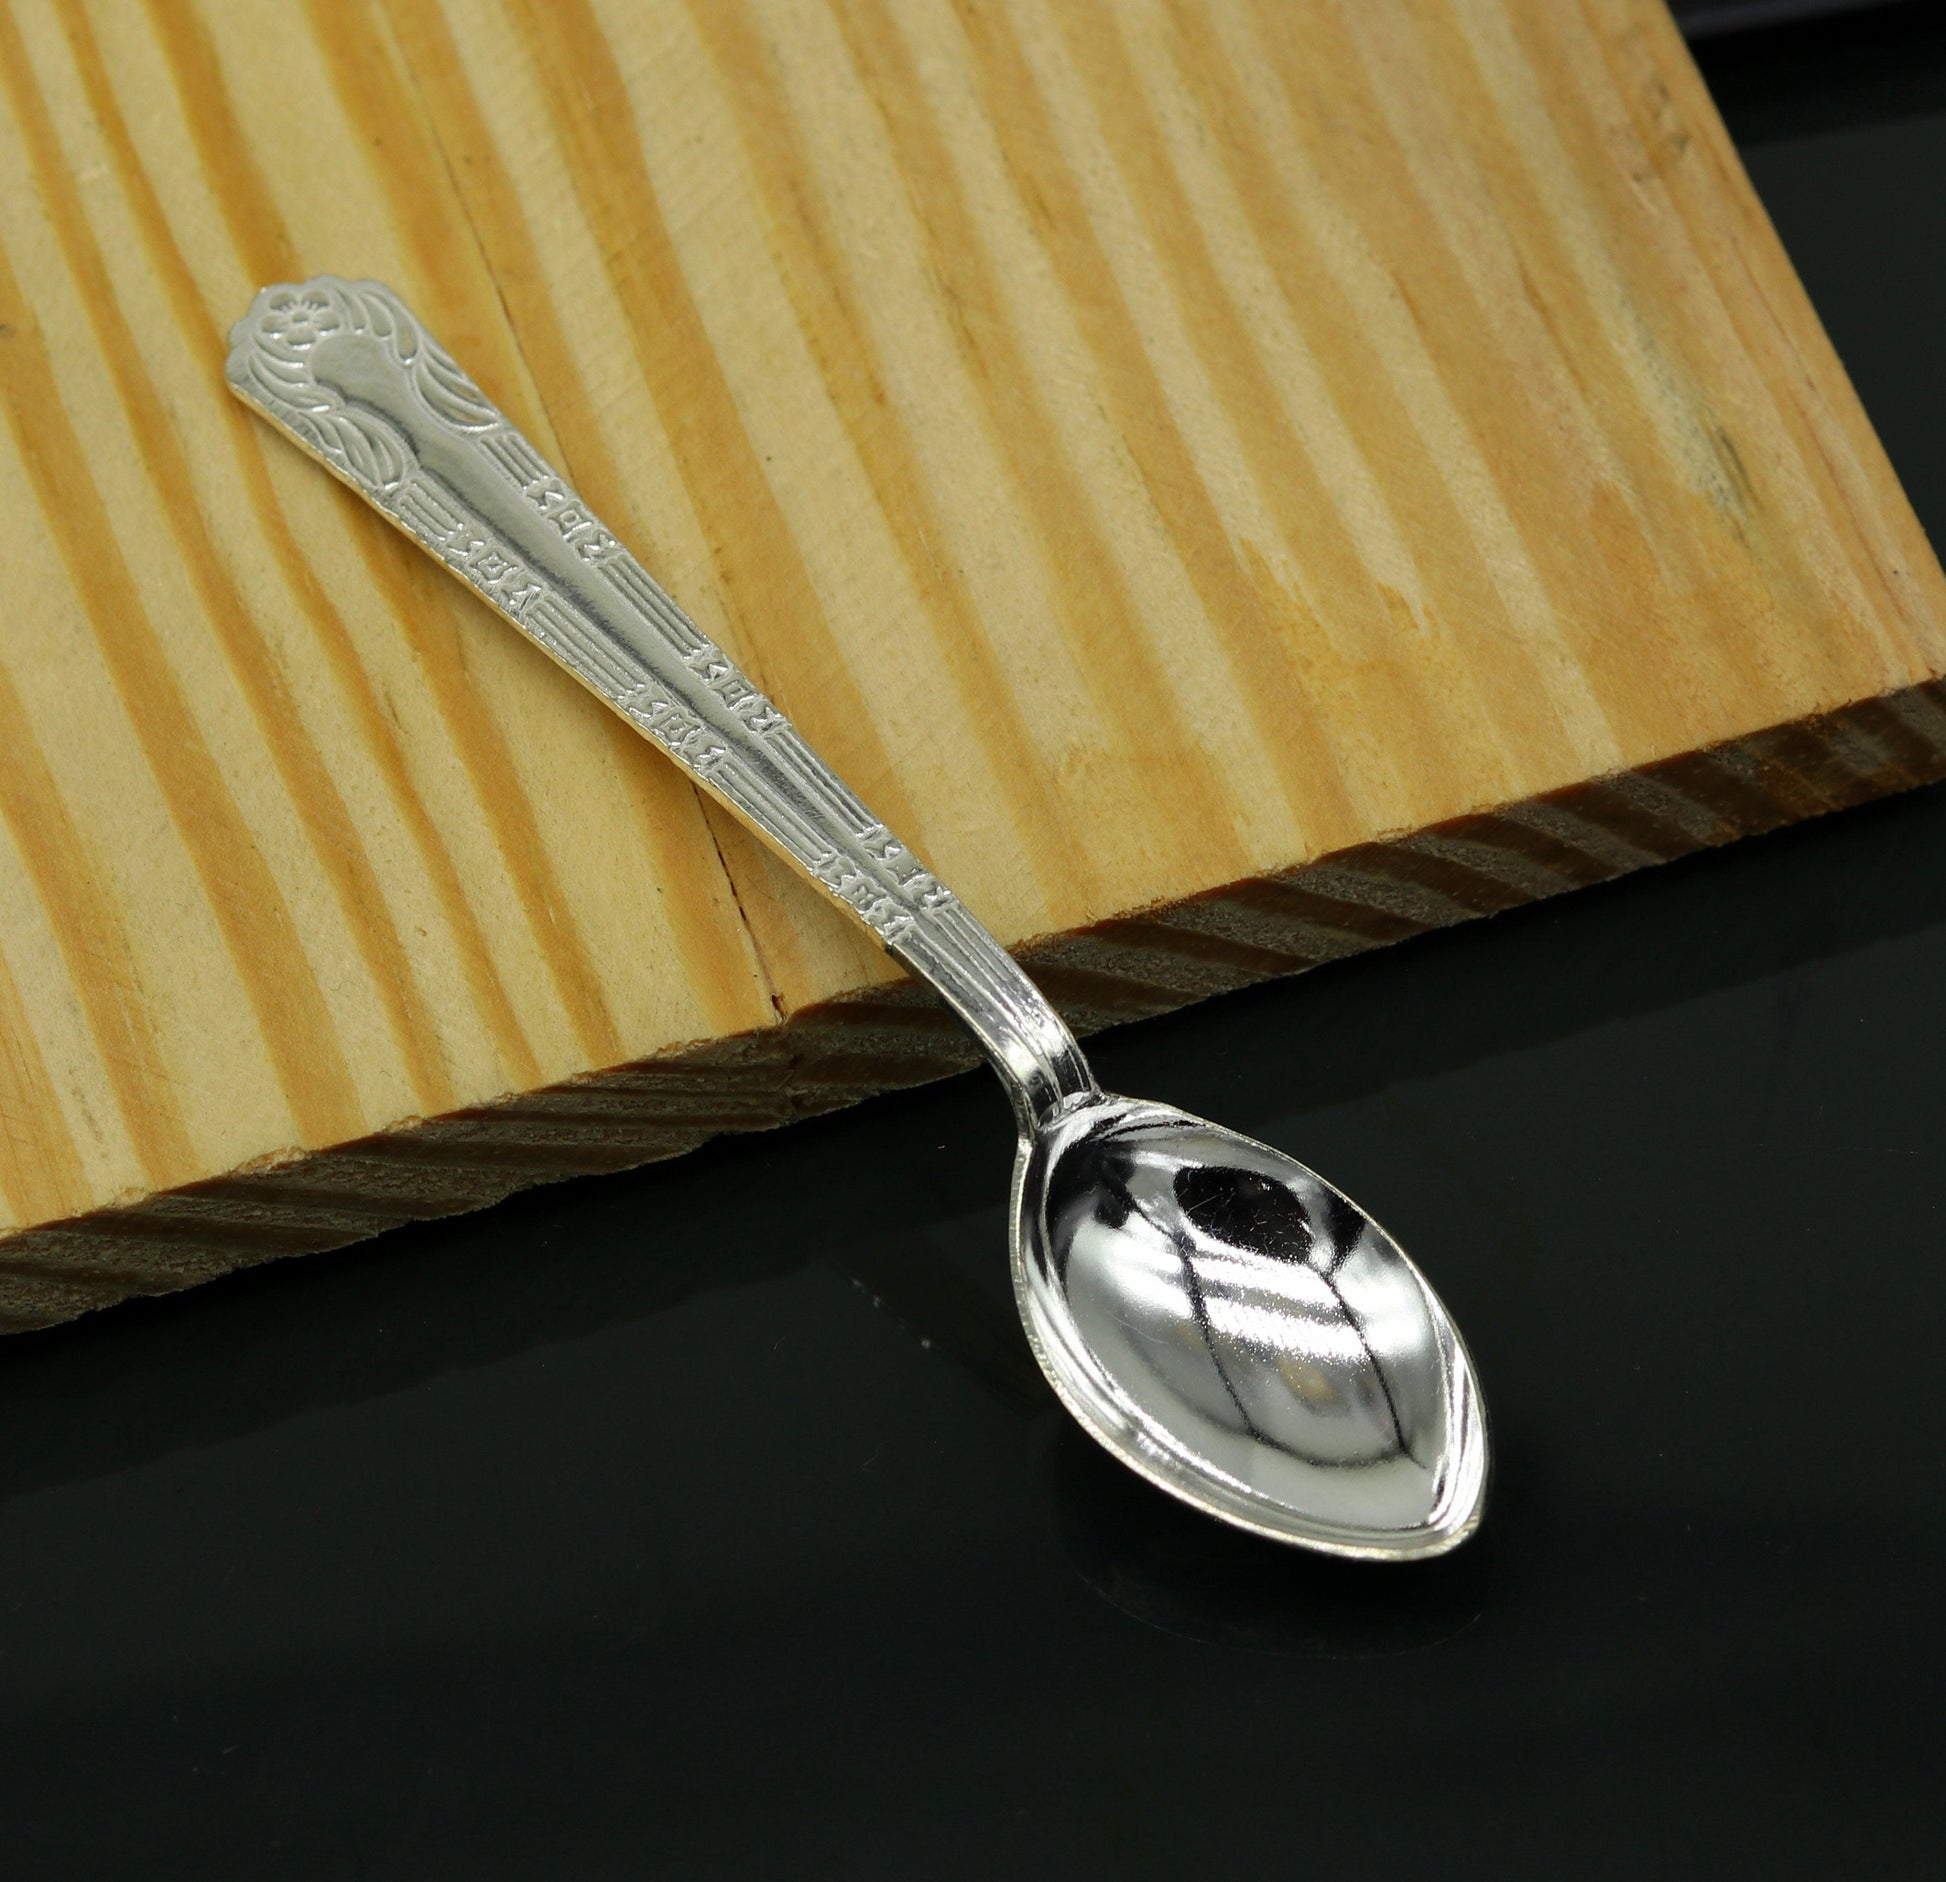 fabulous sterling silver handmade solid silver4.6" spoon kitchen utensils, vessels, silver has antibacterial properties, stay healthy sv60 - TRIBAL ORNAMENTS